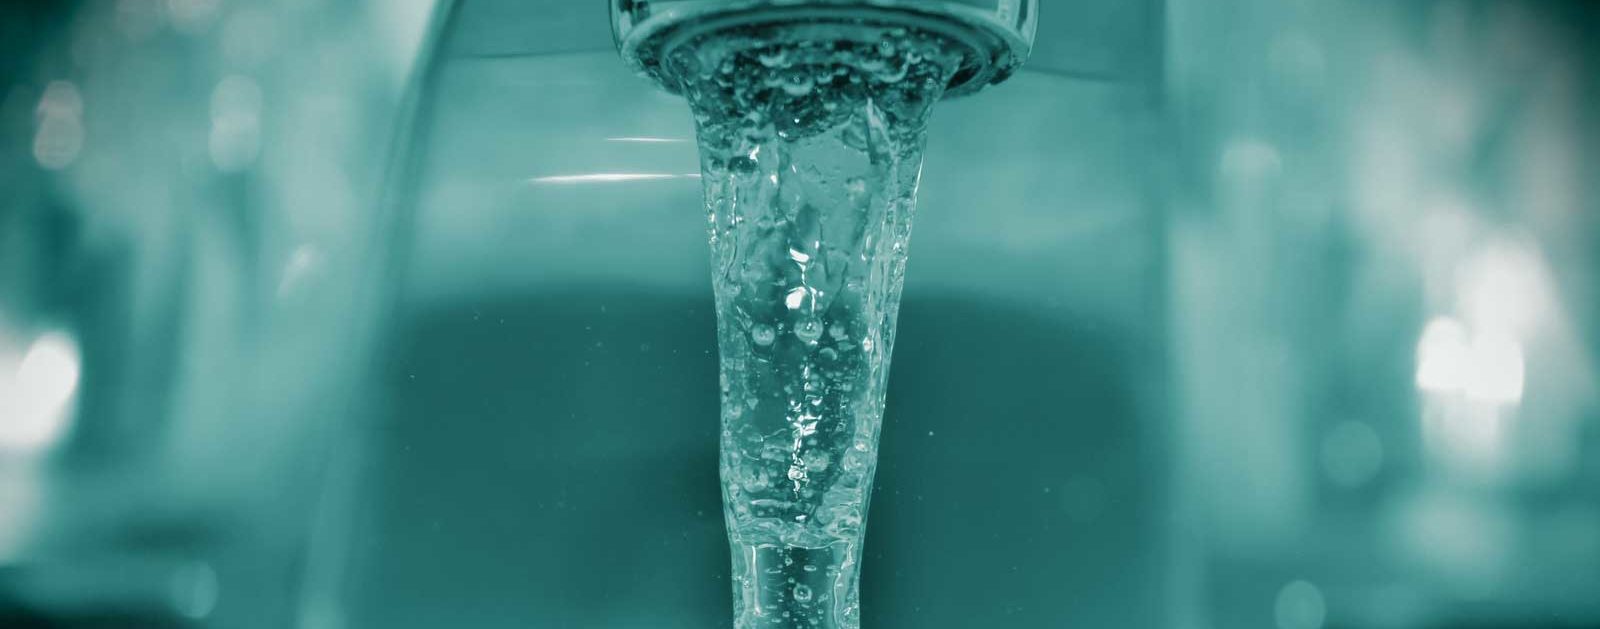 Water faucet | Photo by rajkiran ghanta